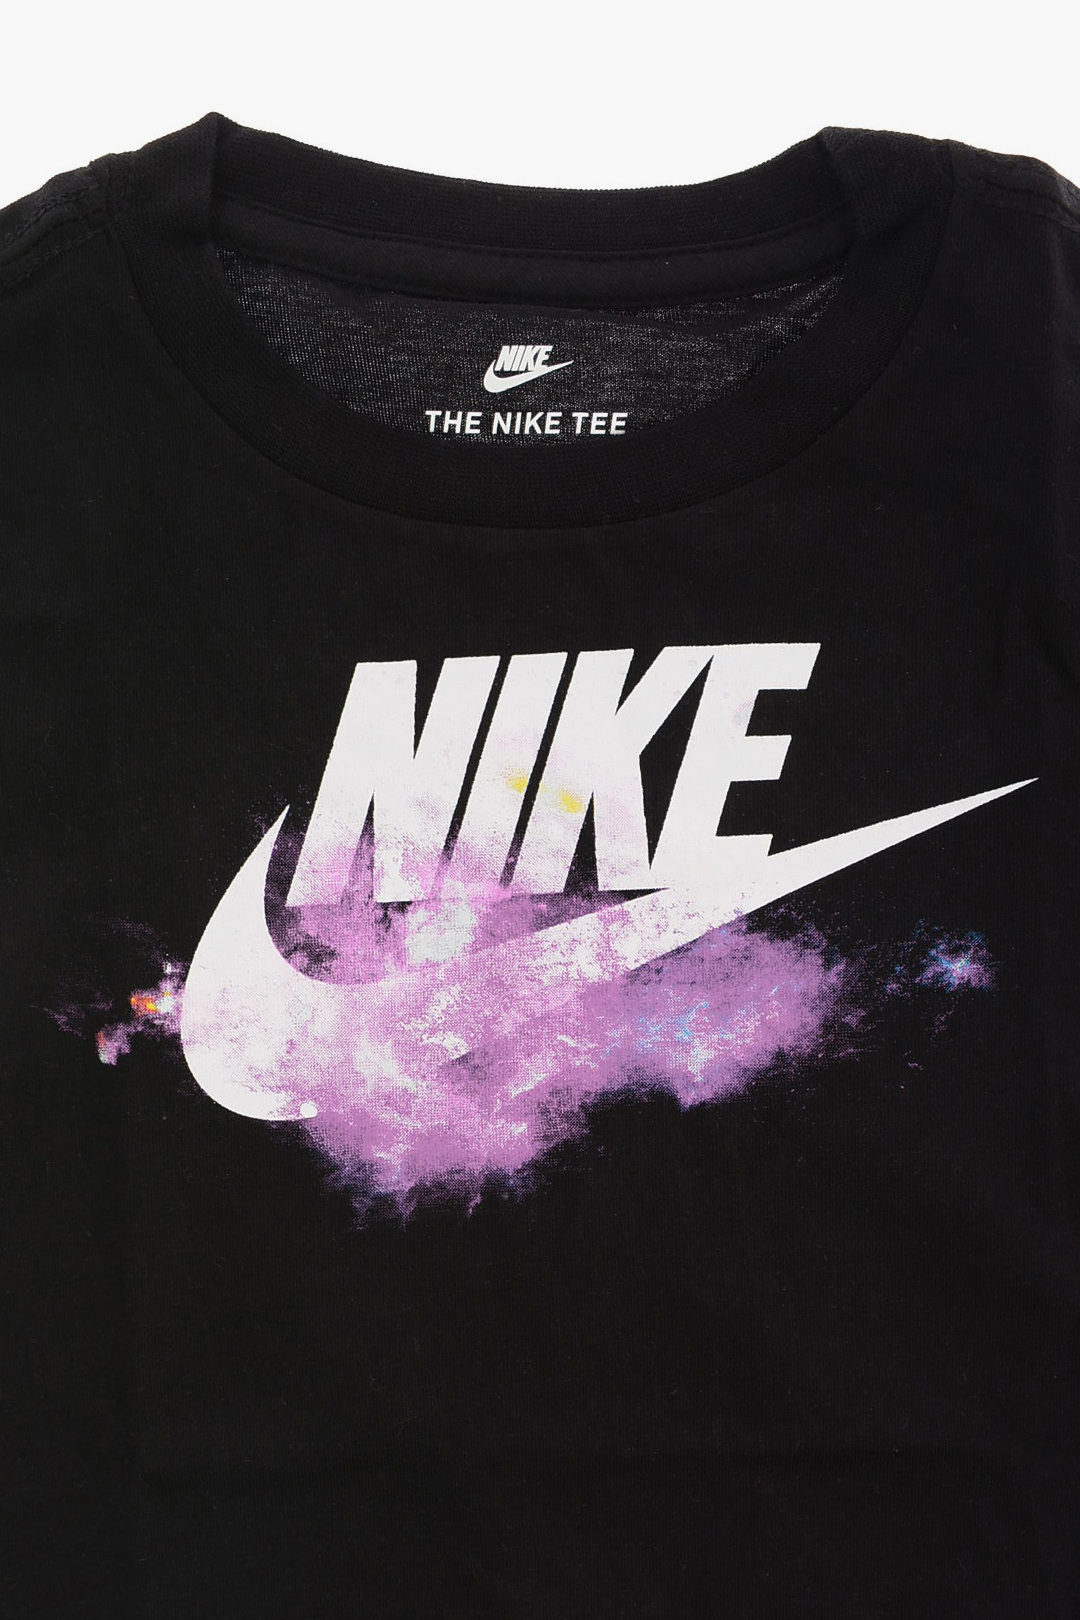 Nike Galaxy Shirt - galaxy nike roblox t shirt